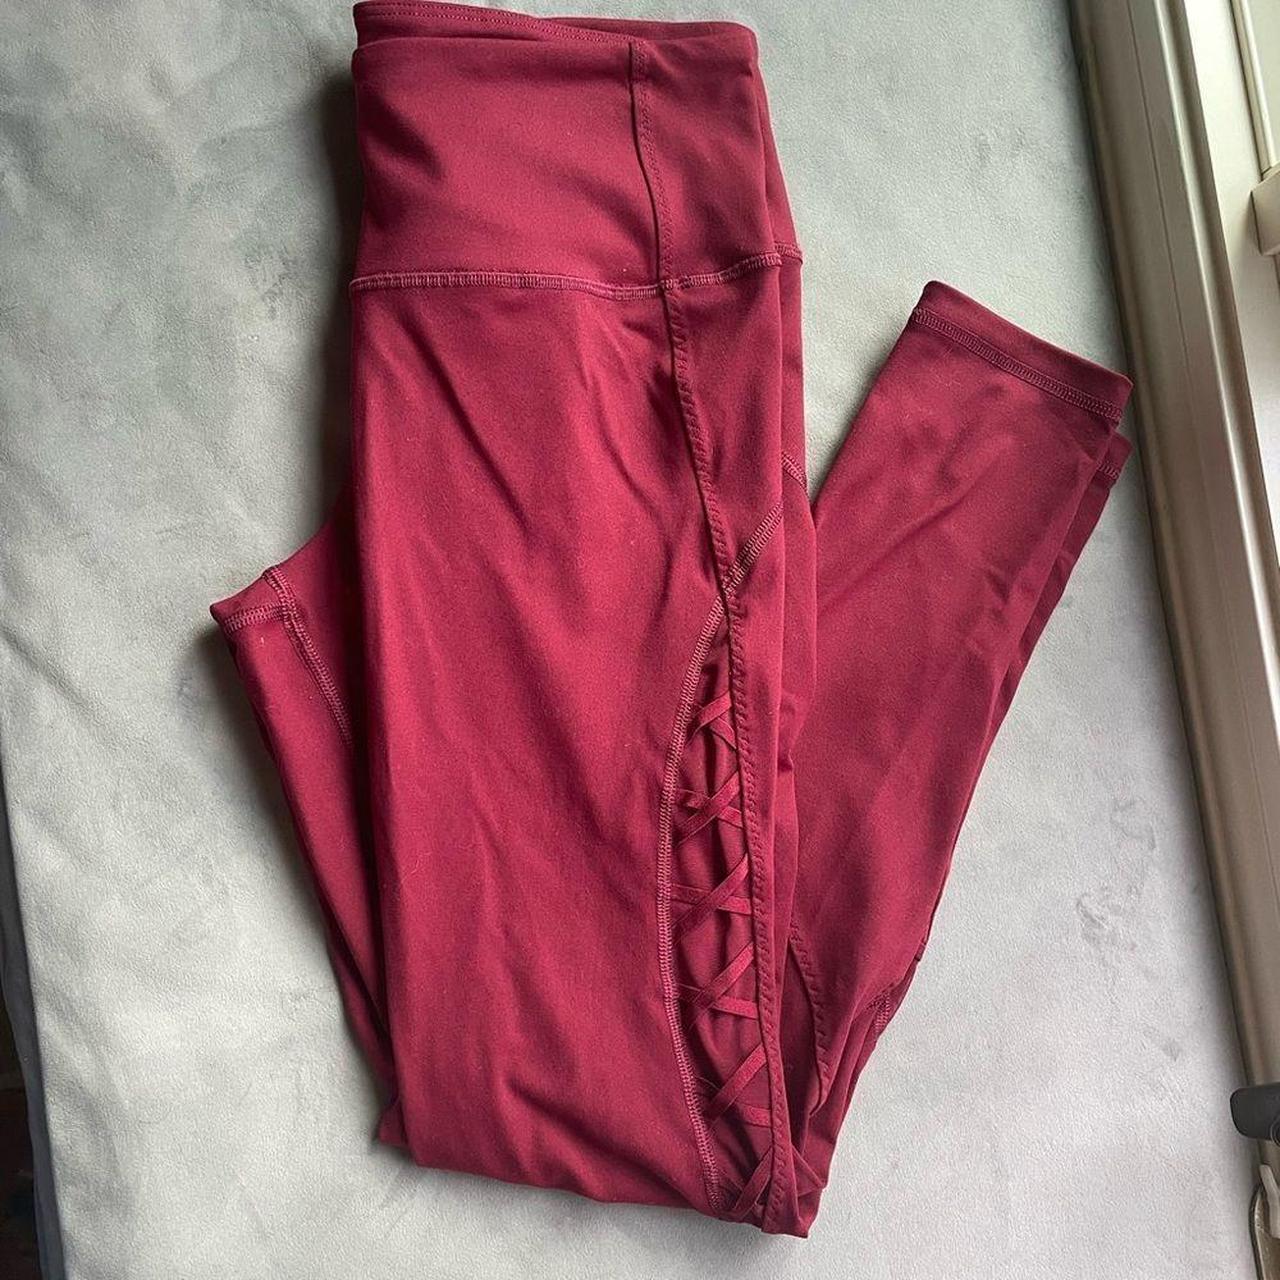 victoria's secret red knockout leggings size medium - Depop